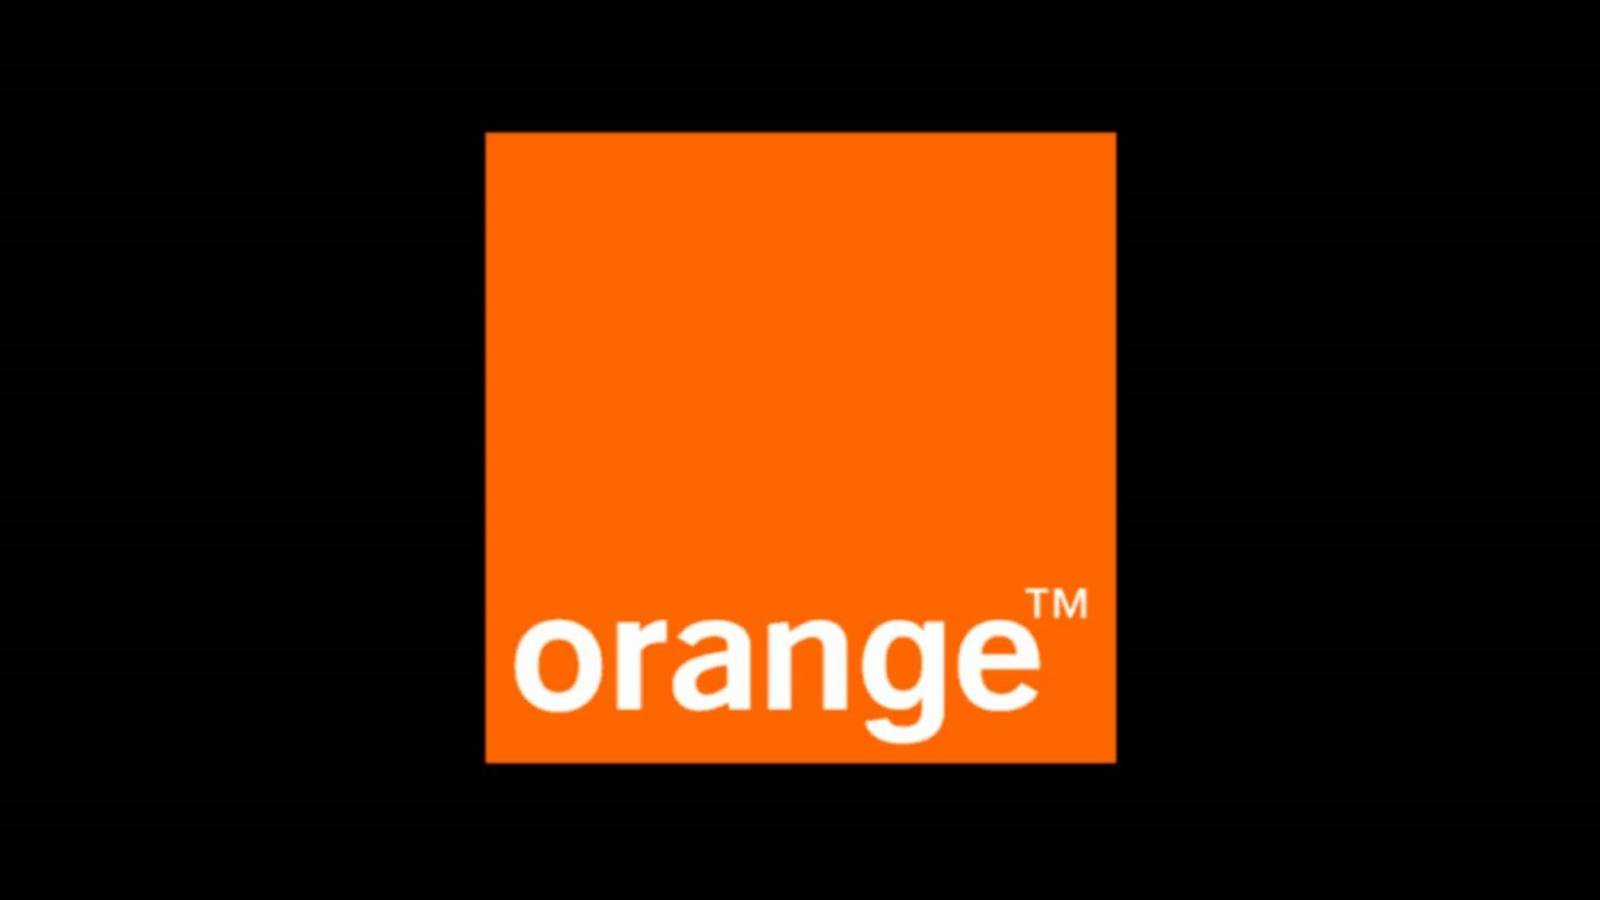 Orange standard